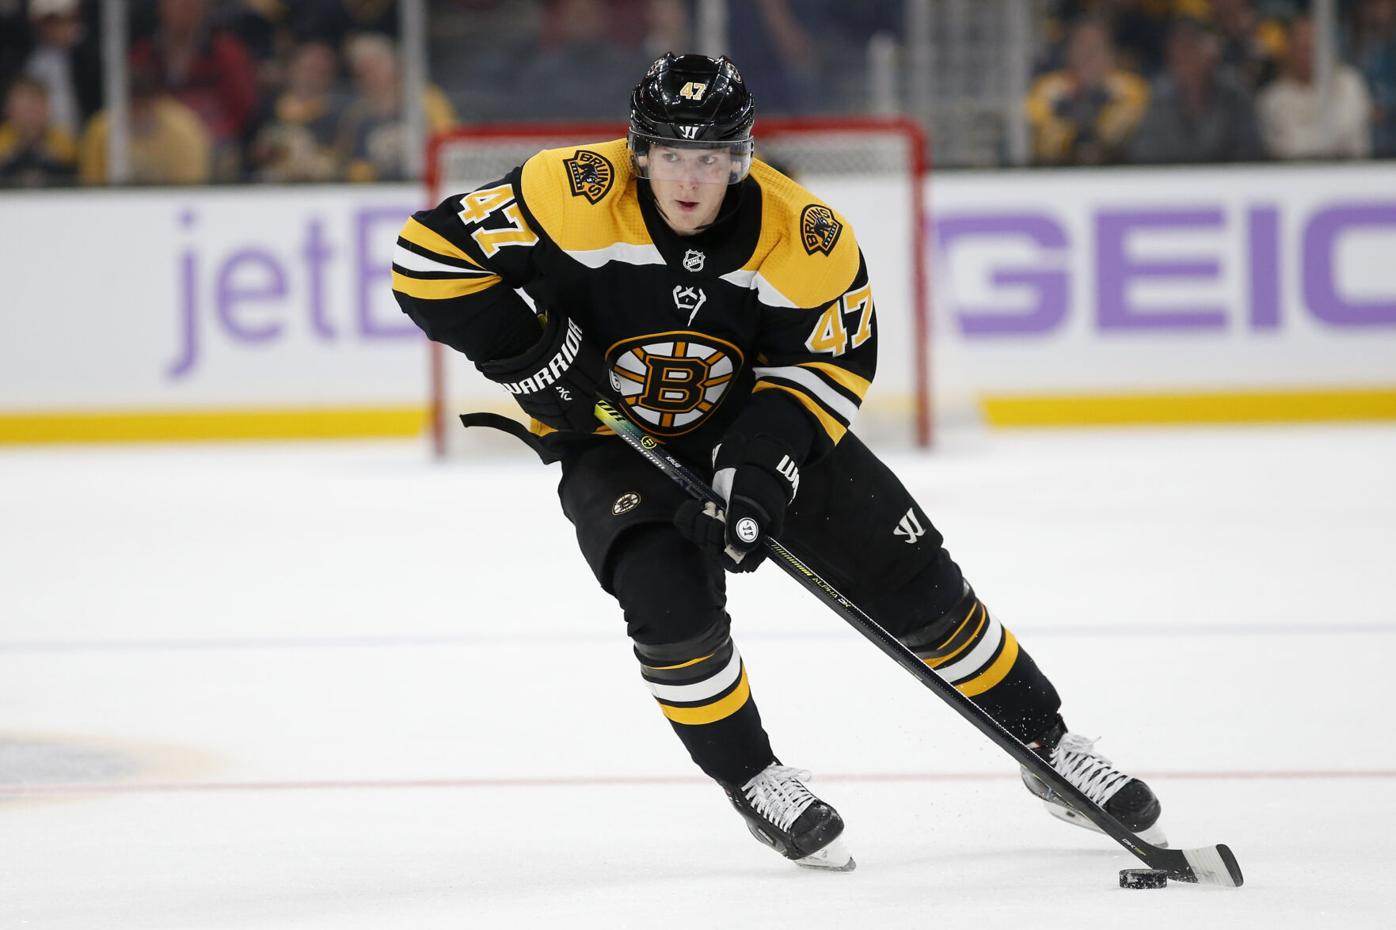 Bruins' Torey Krug hoping he'll be back with Boston when hockey returns